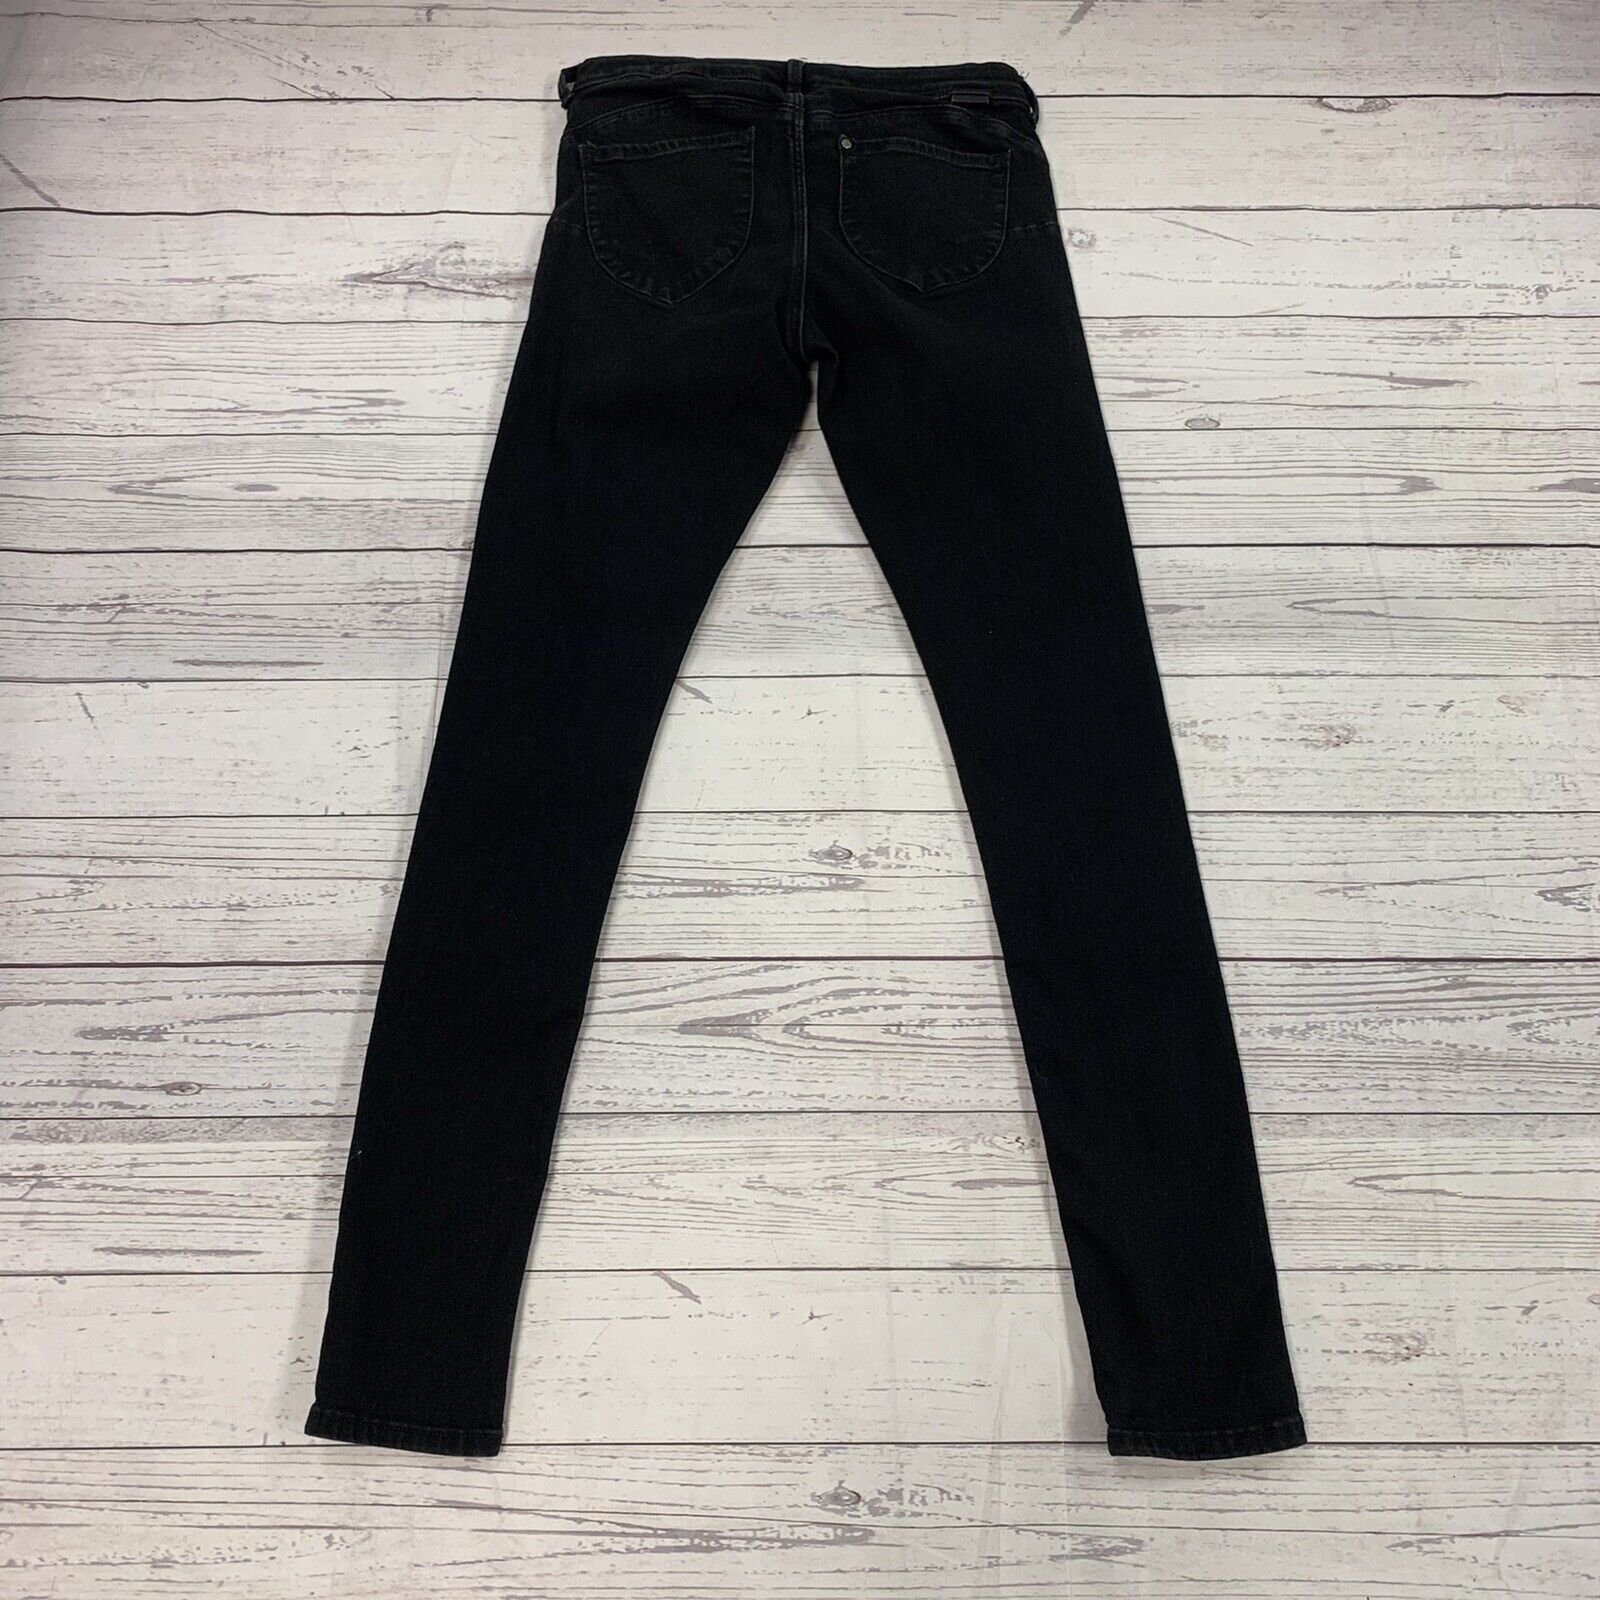 Denim Black Jeggings Jeans Size 29 - beyond exchange